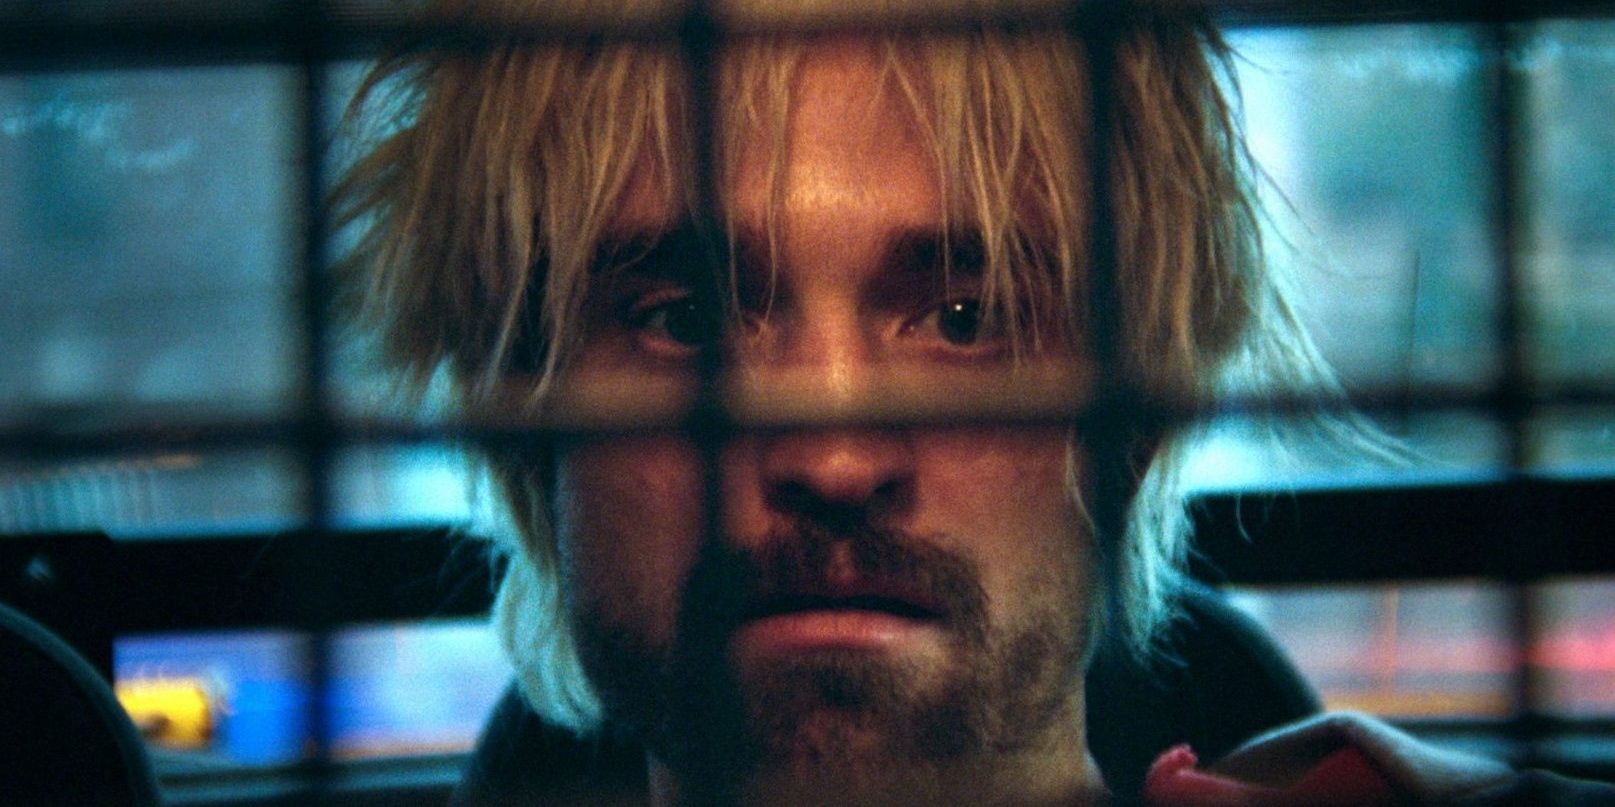 Robert Pattinson behind bars in Good Time 